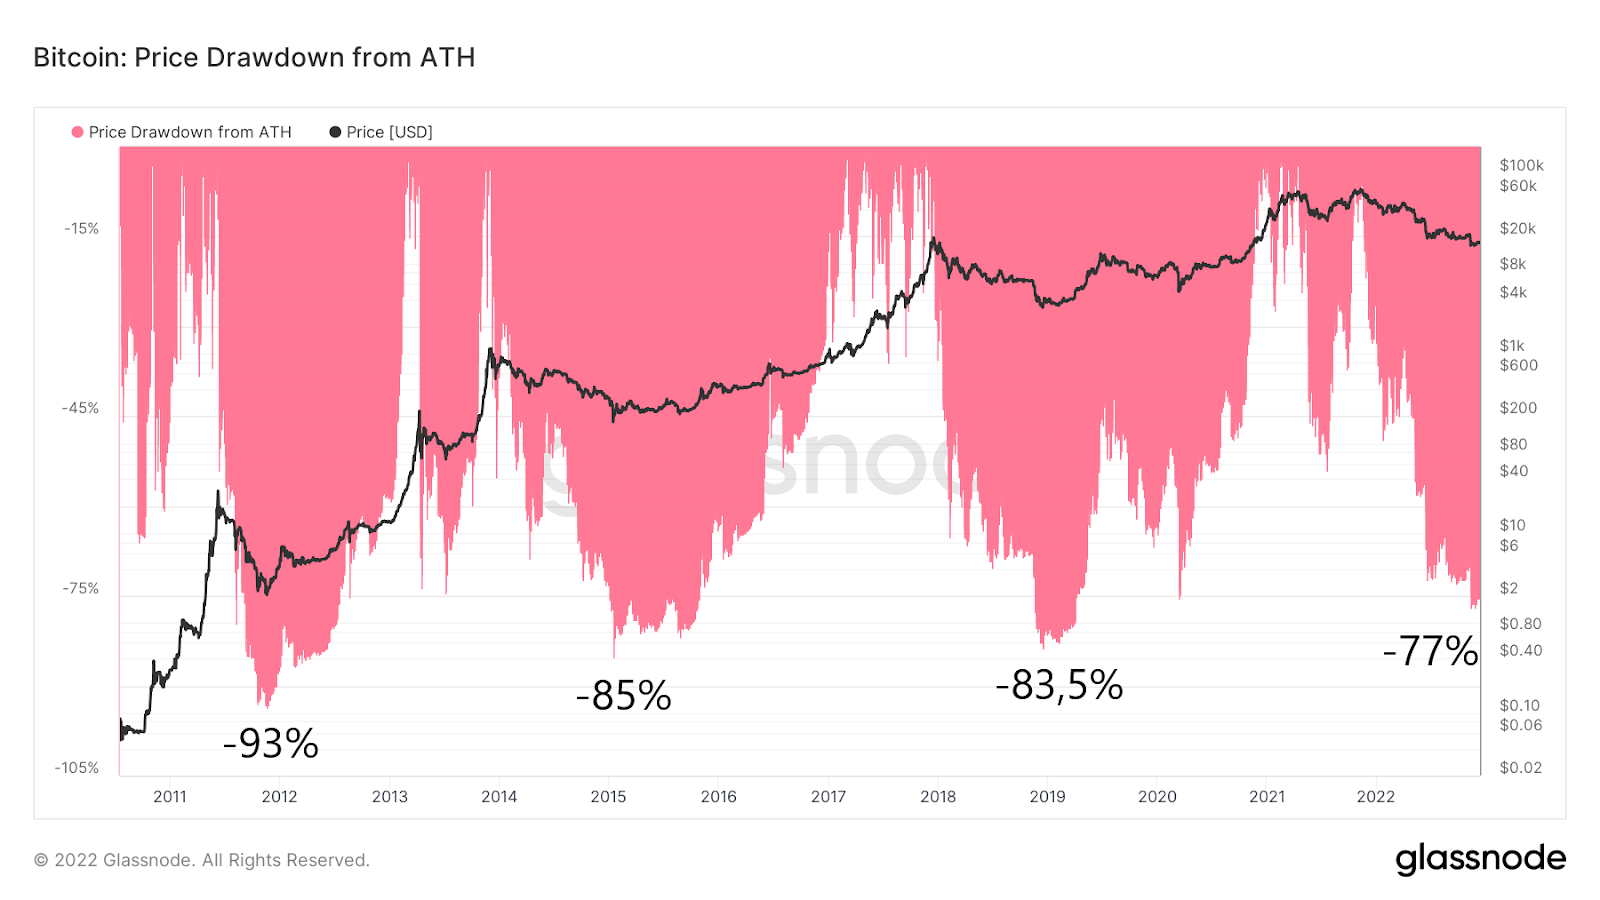 Bitcoin Price Drawdown from ATH